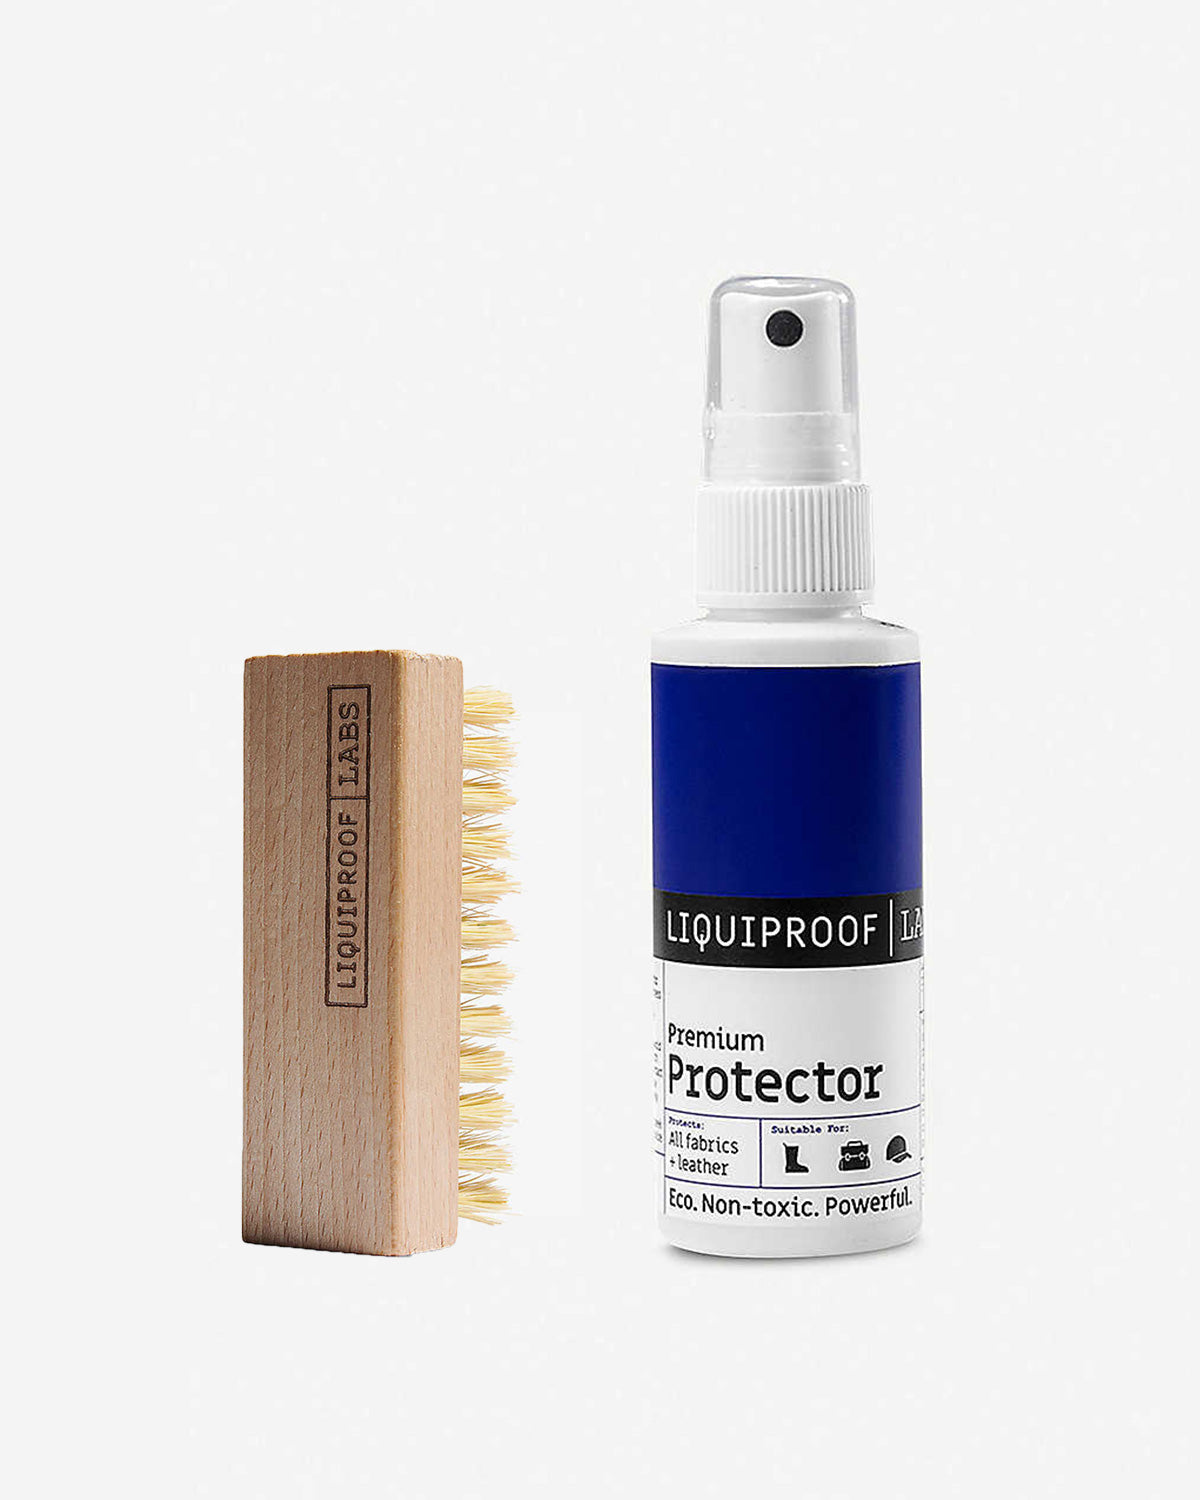 LIQUIPROOF Protector Kit 50